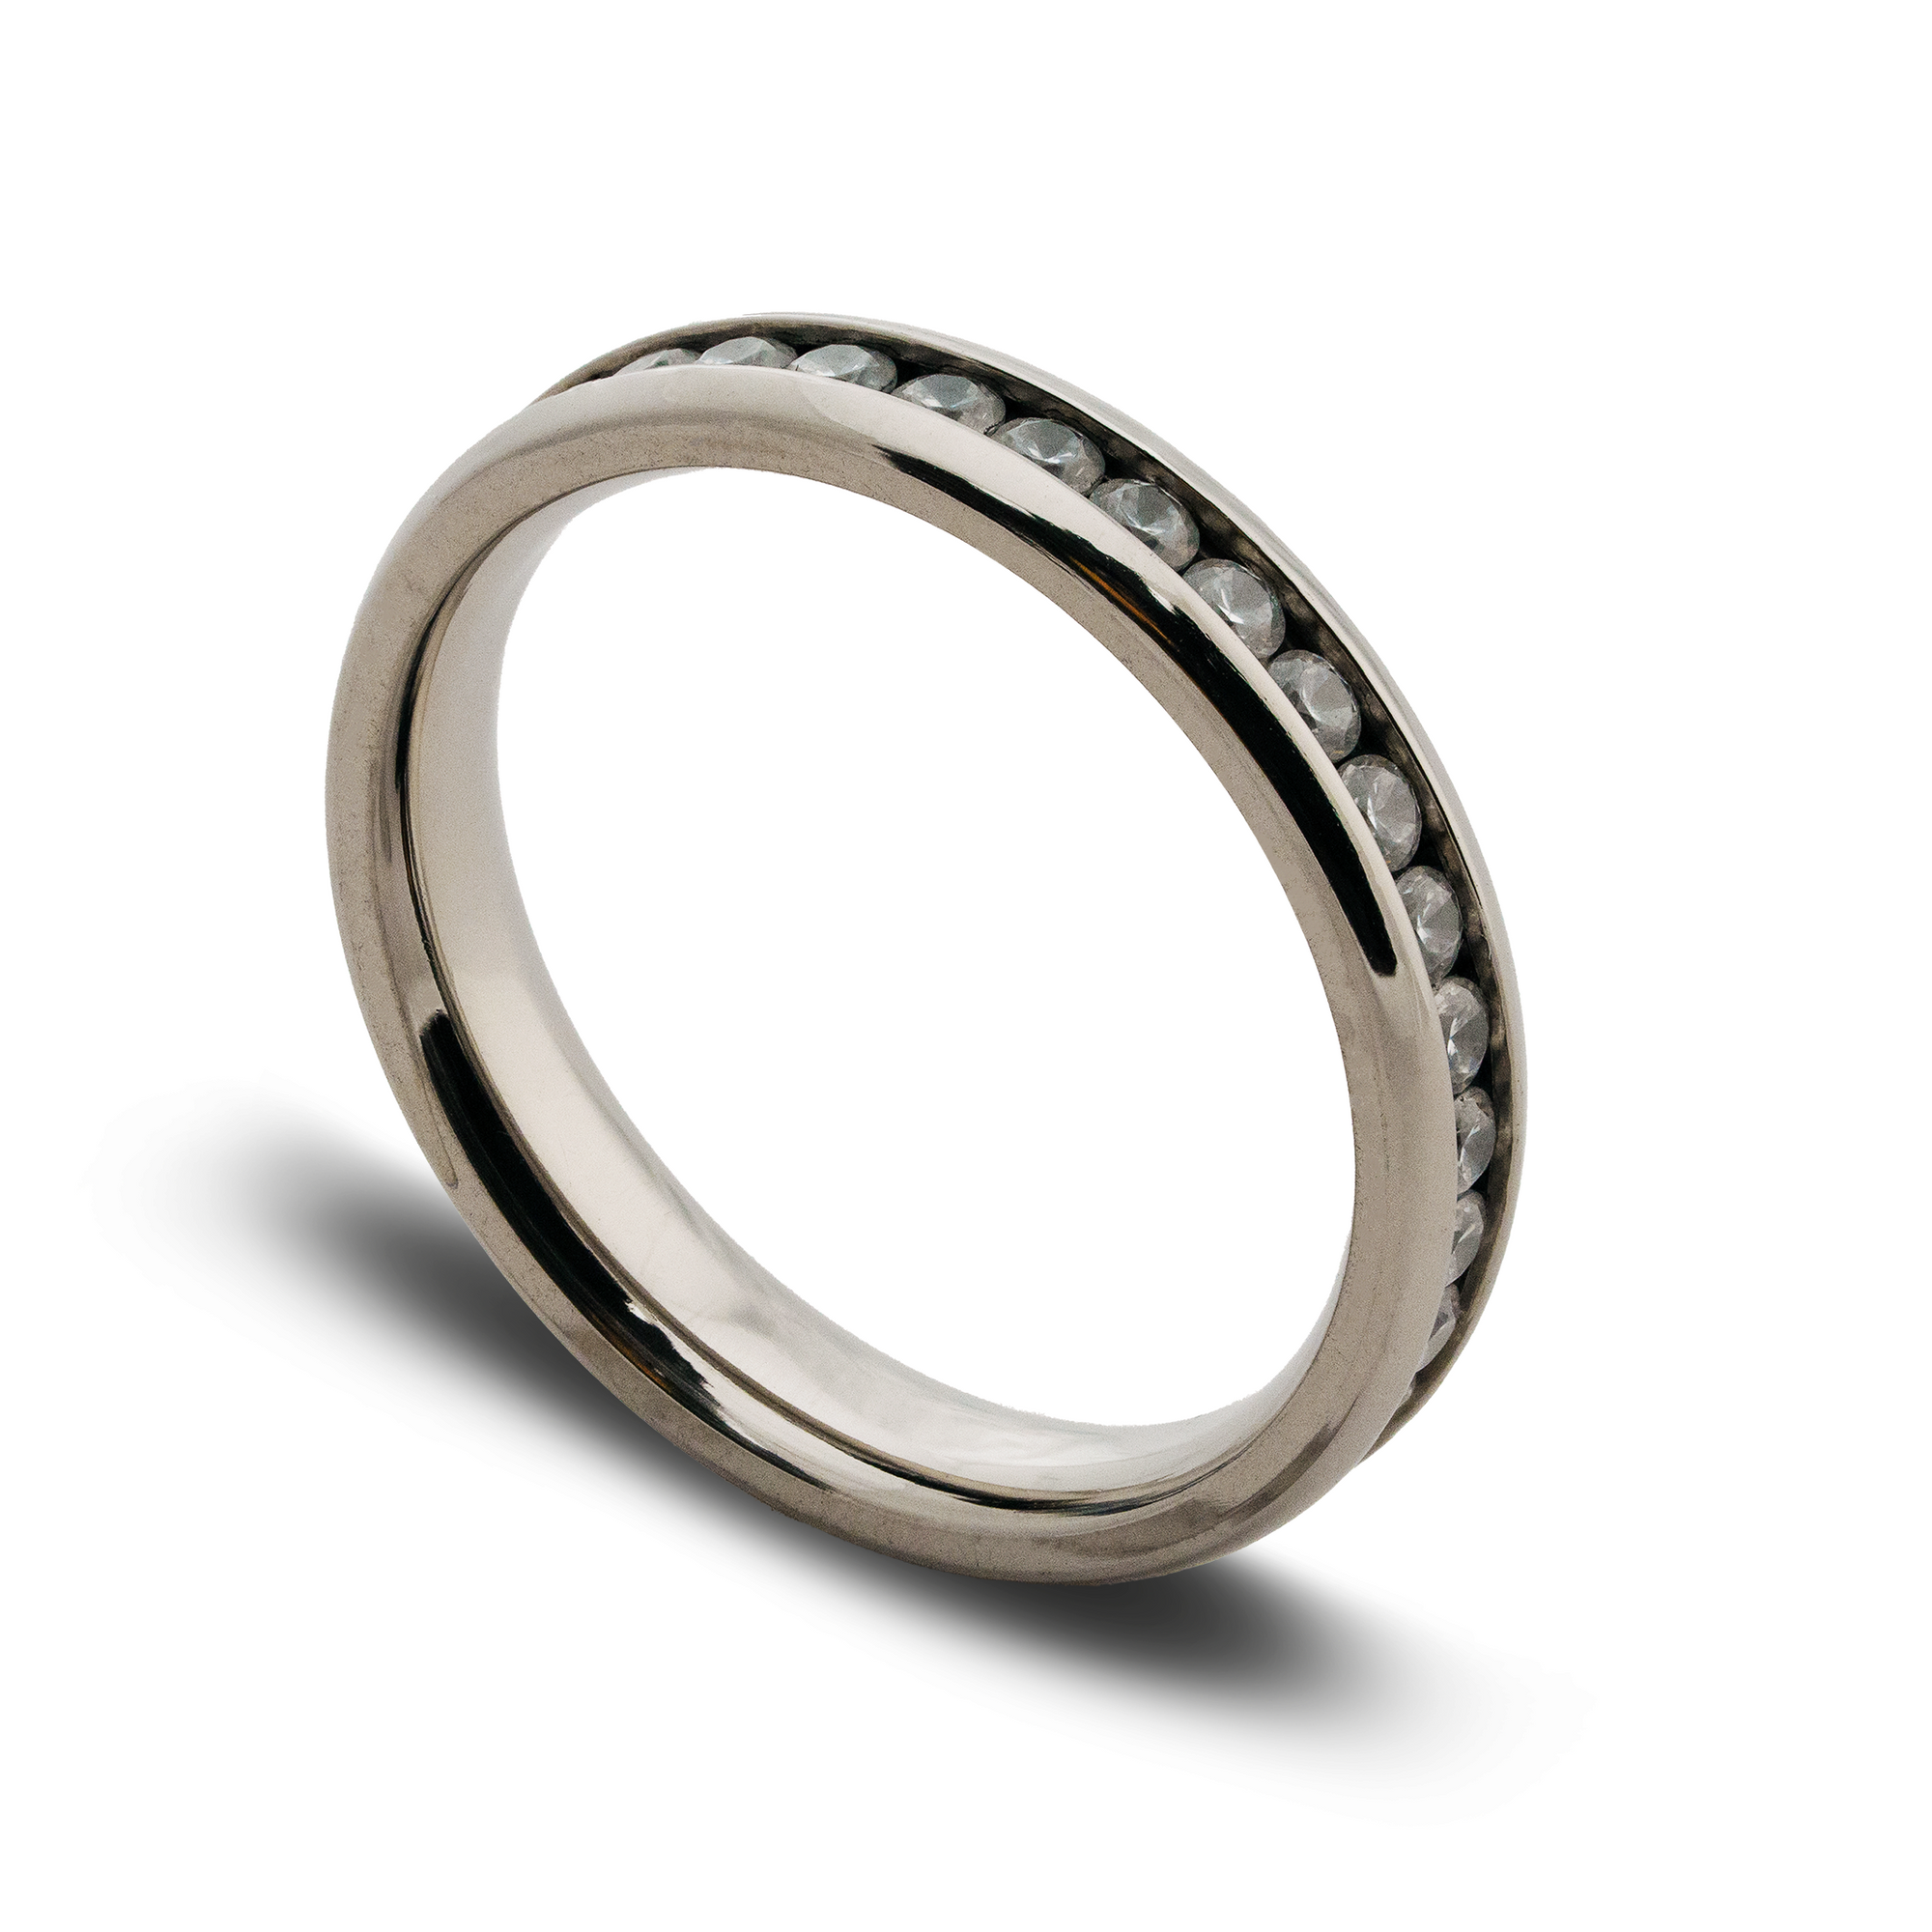 The “Nova” Ring